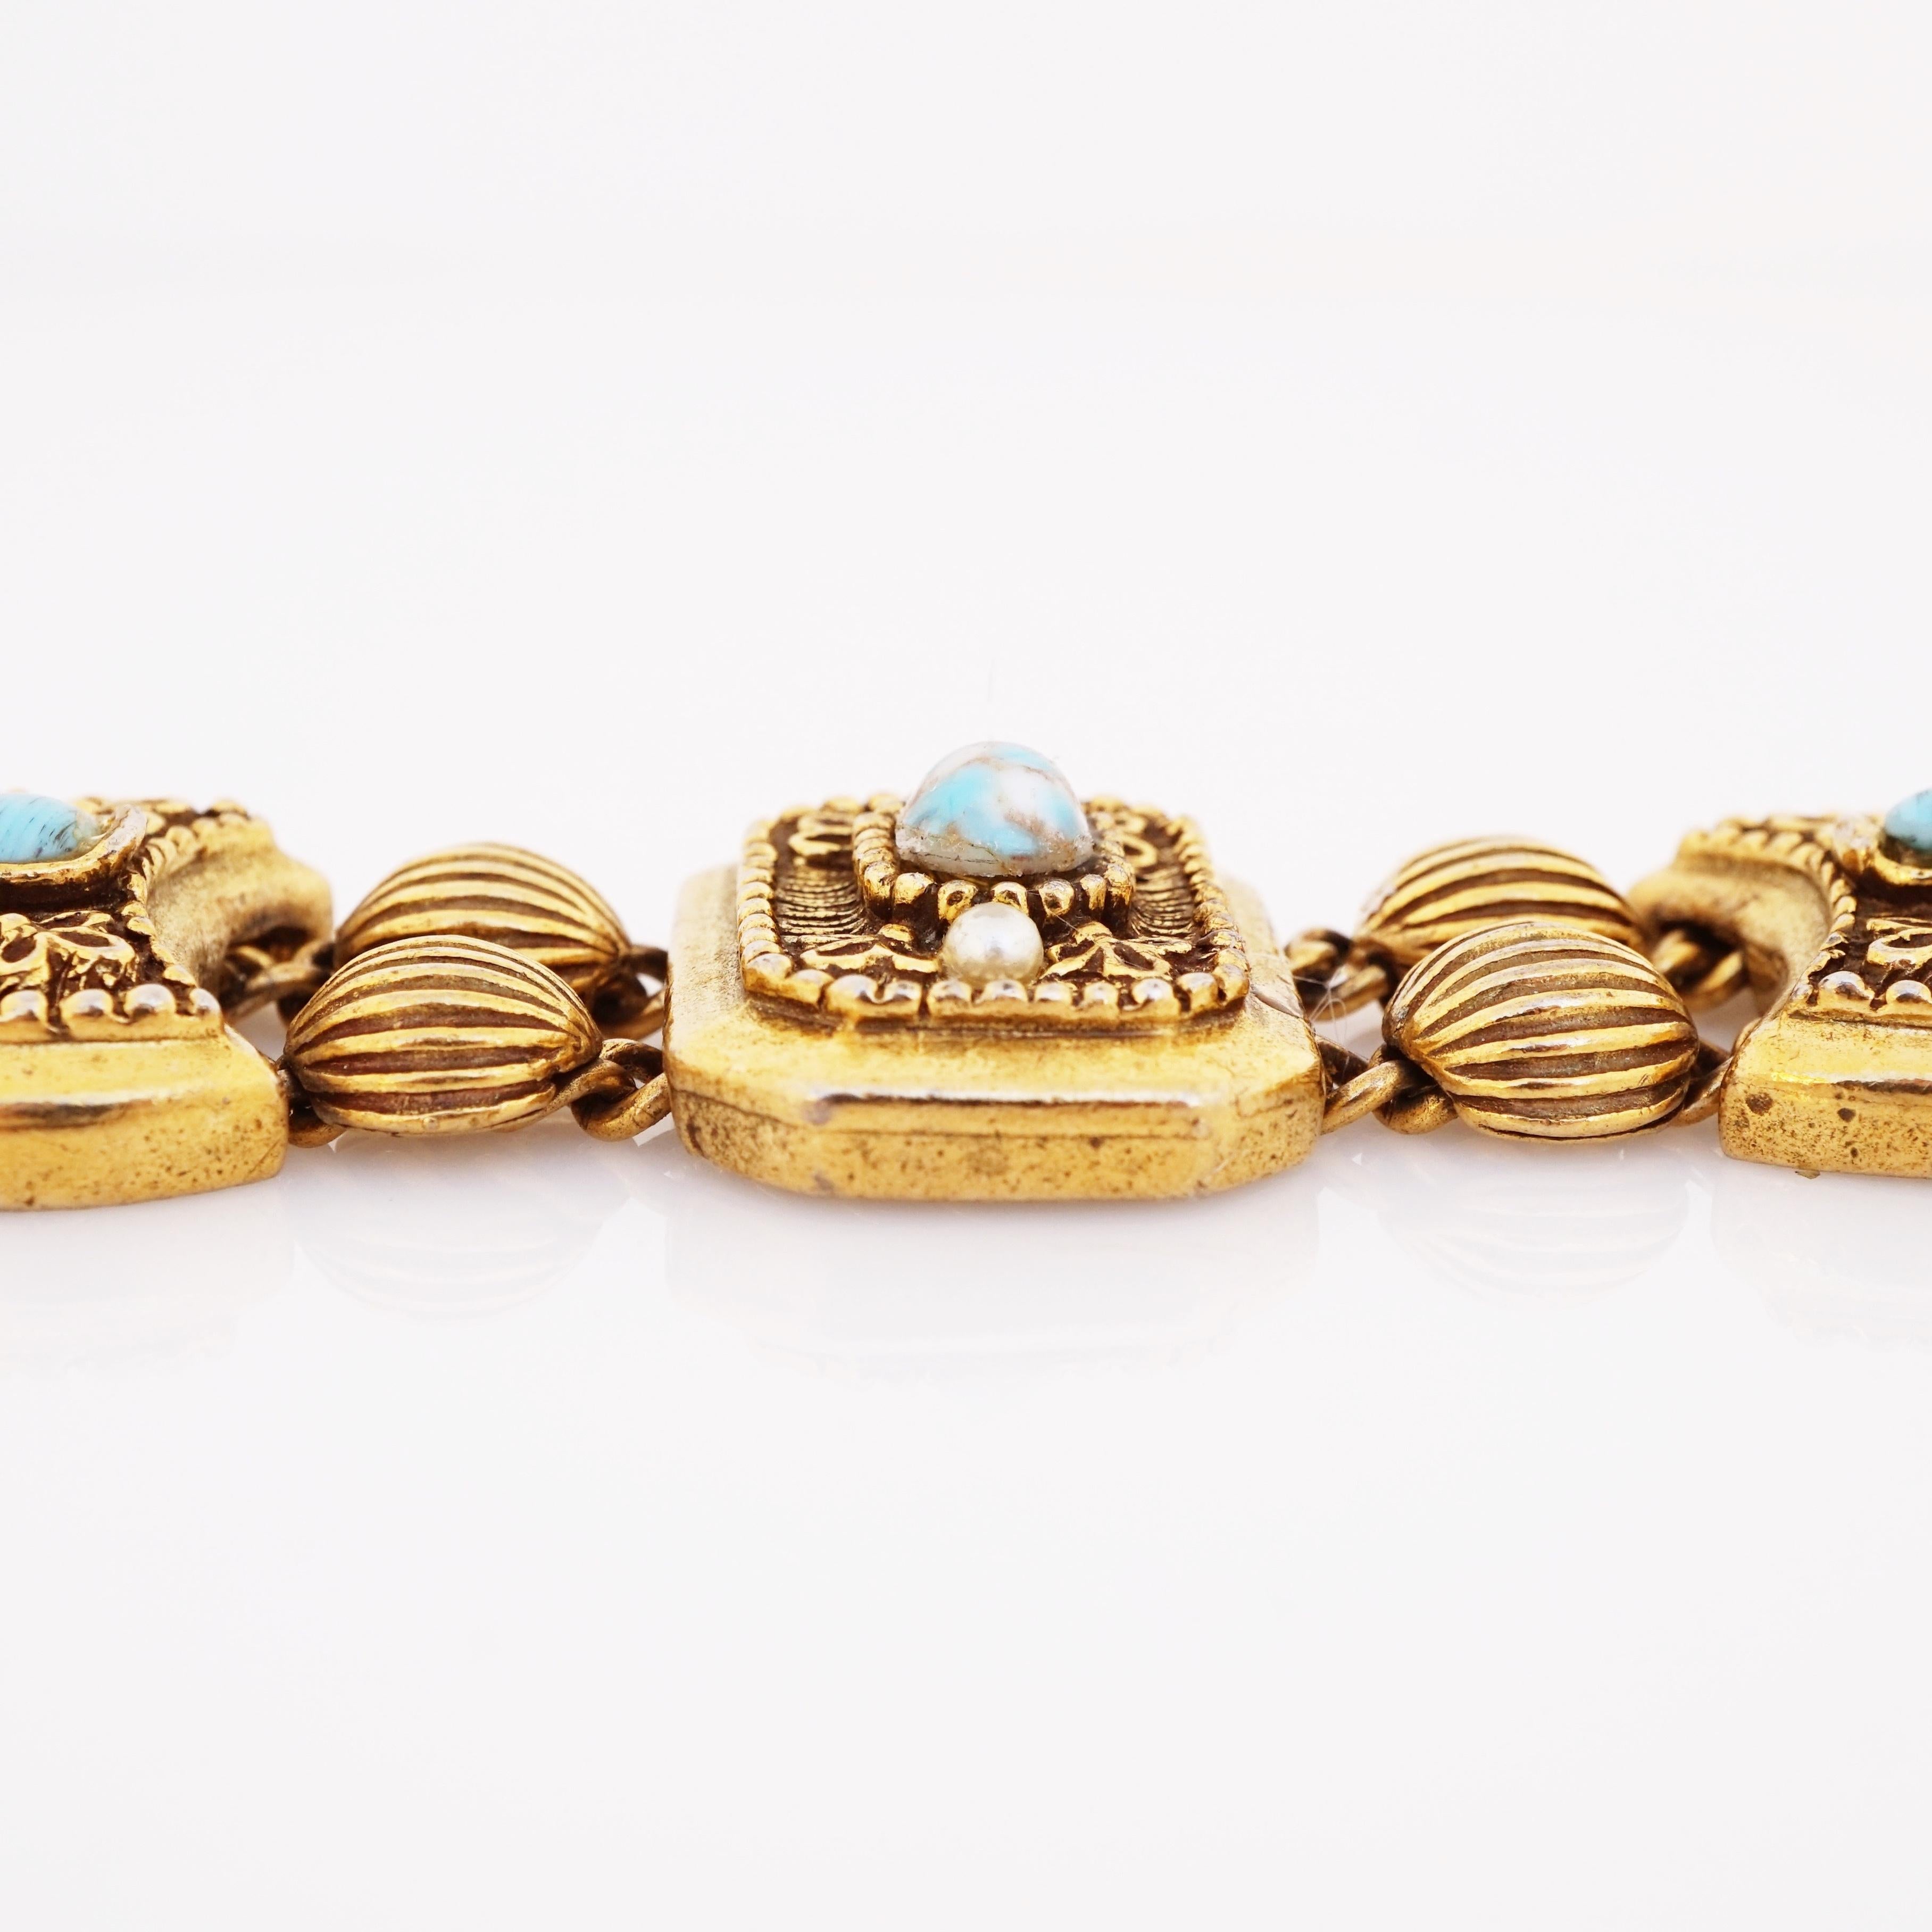 Modern 1960s Goldette Victorian Revival Ornate Link Bracelet With Turquoise Cabochons For Sale